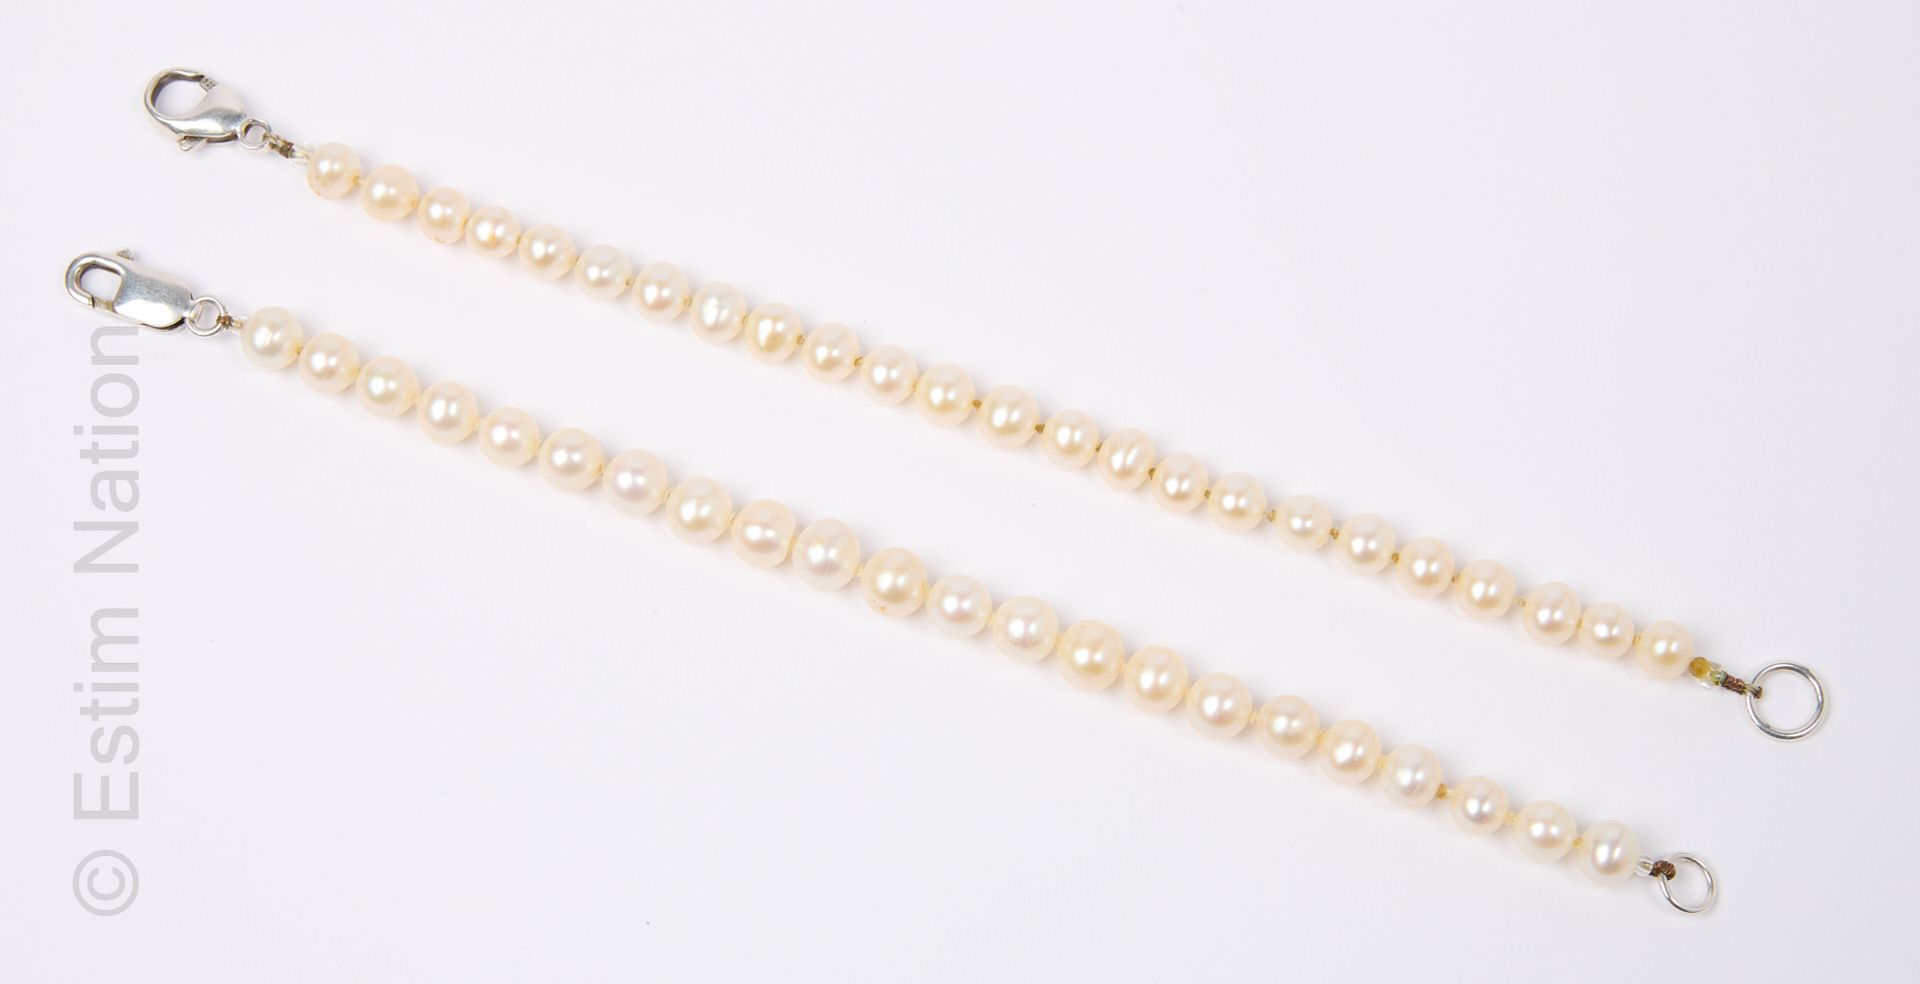 LOT DE COLLIERS PERLES DE CULTURE 拍品包括两个安装在棉线上的白色养殖珍珠手镯。扣子为银制（925千分之一）。珍珠的直径：5.7&hellip;